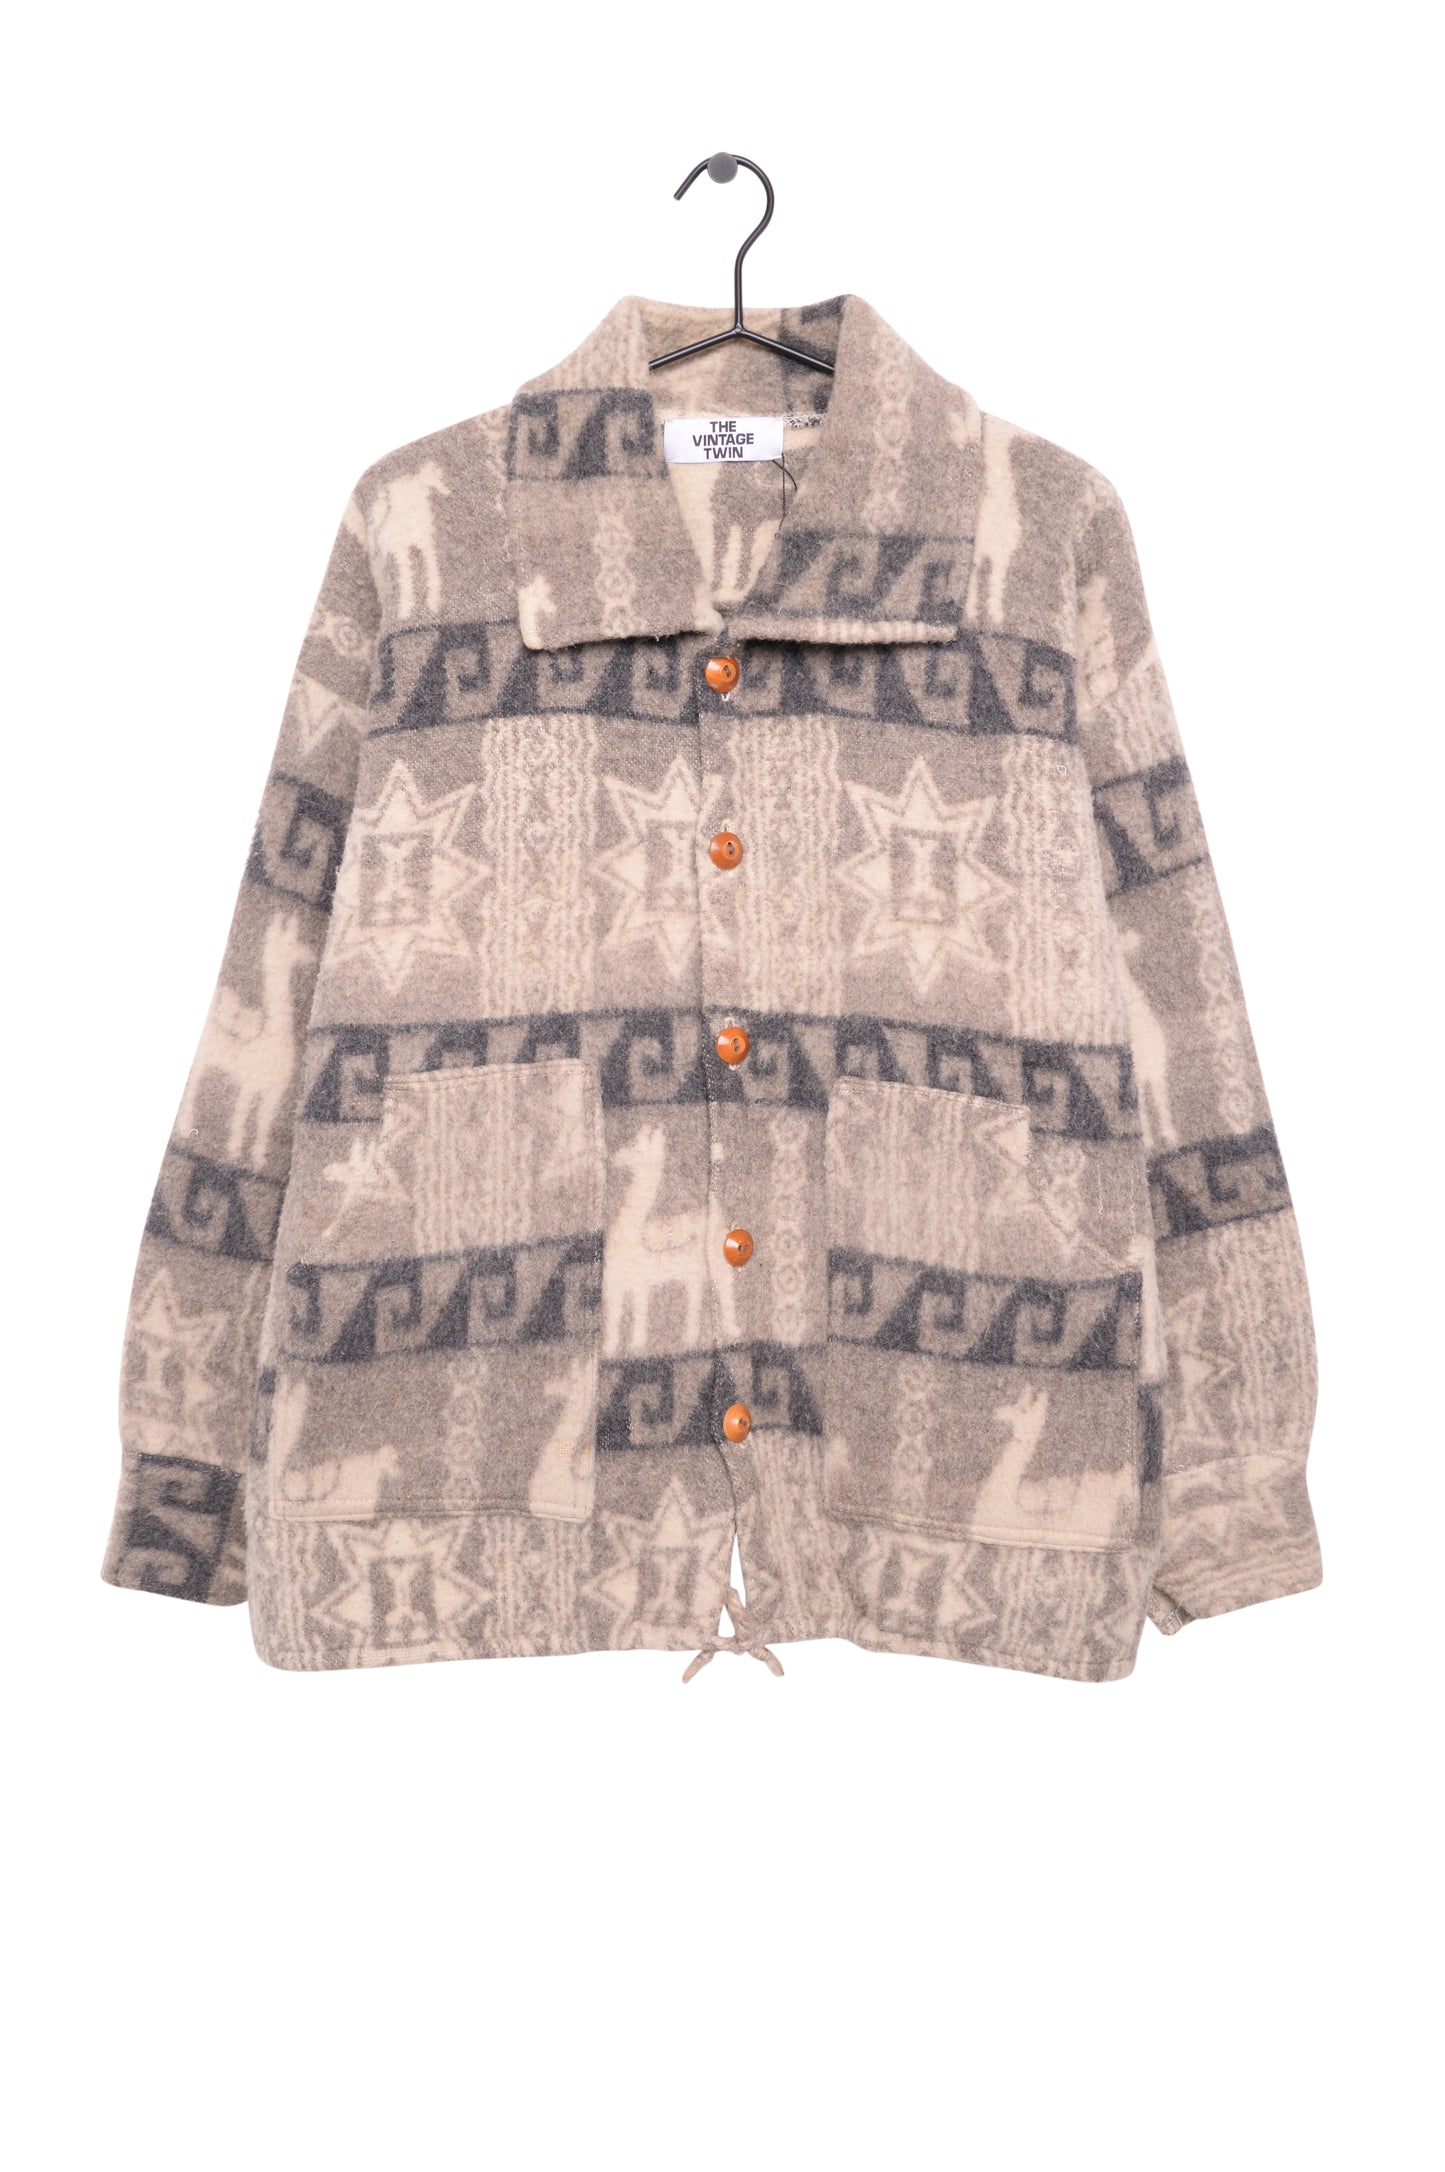 Llamas Sweater Jacket